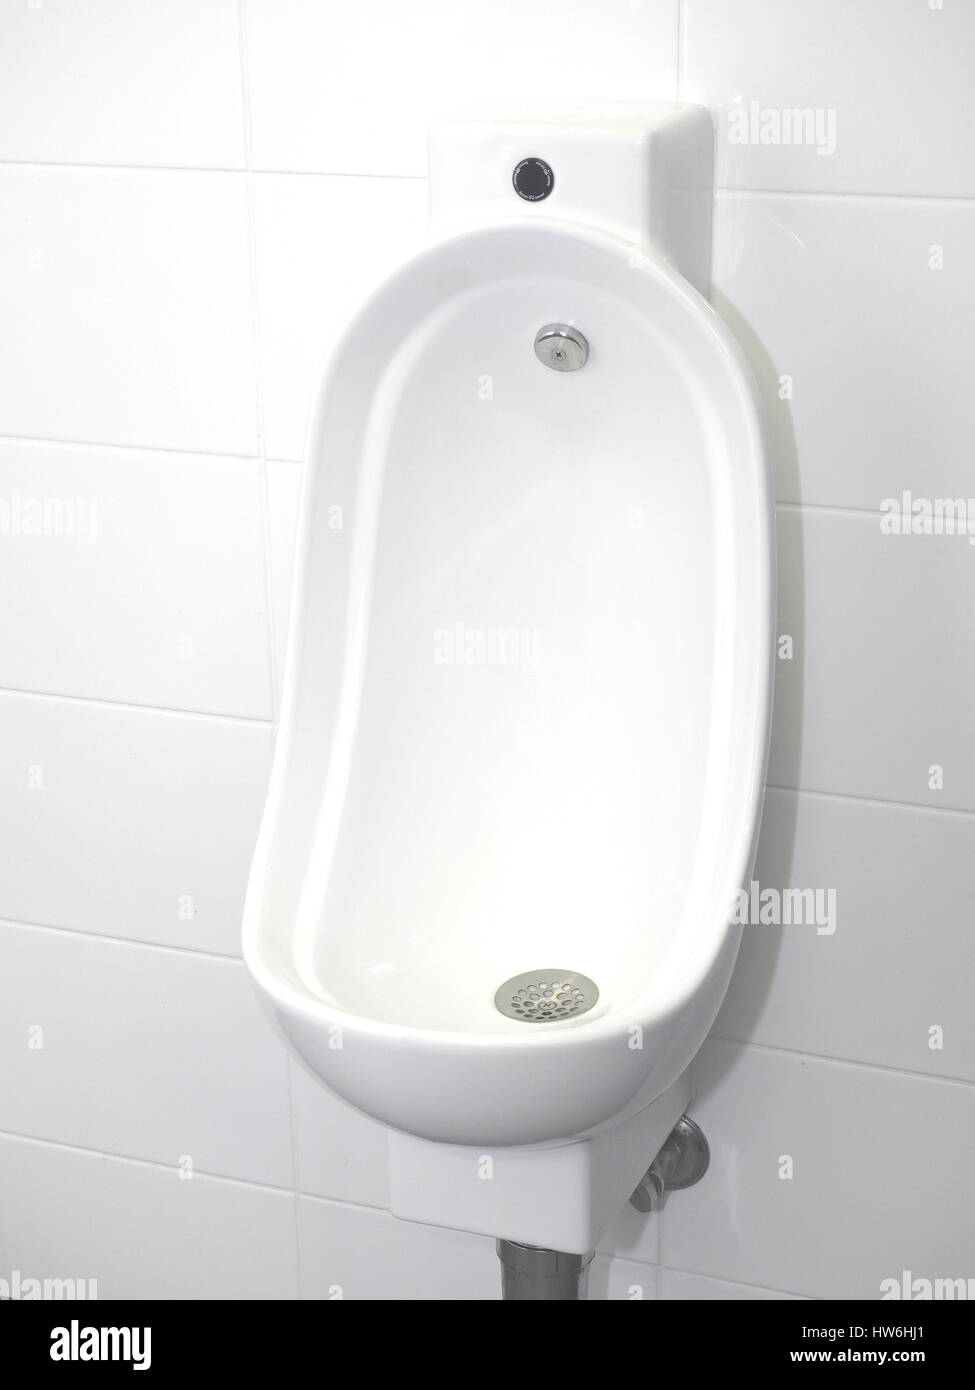 https://c8.alamy.com/comp/HW6HJ1/urinal-bowl-with-automatic-hands-free-flush-in-a-pristine-lavatory-HW6HJ1.jpg